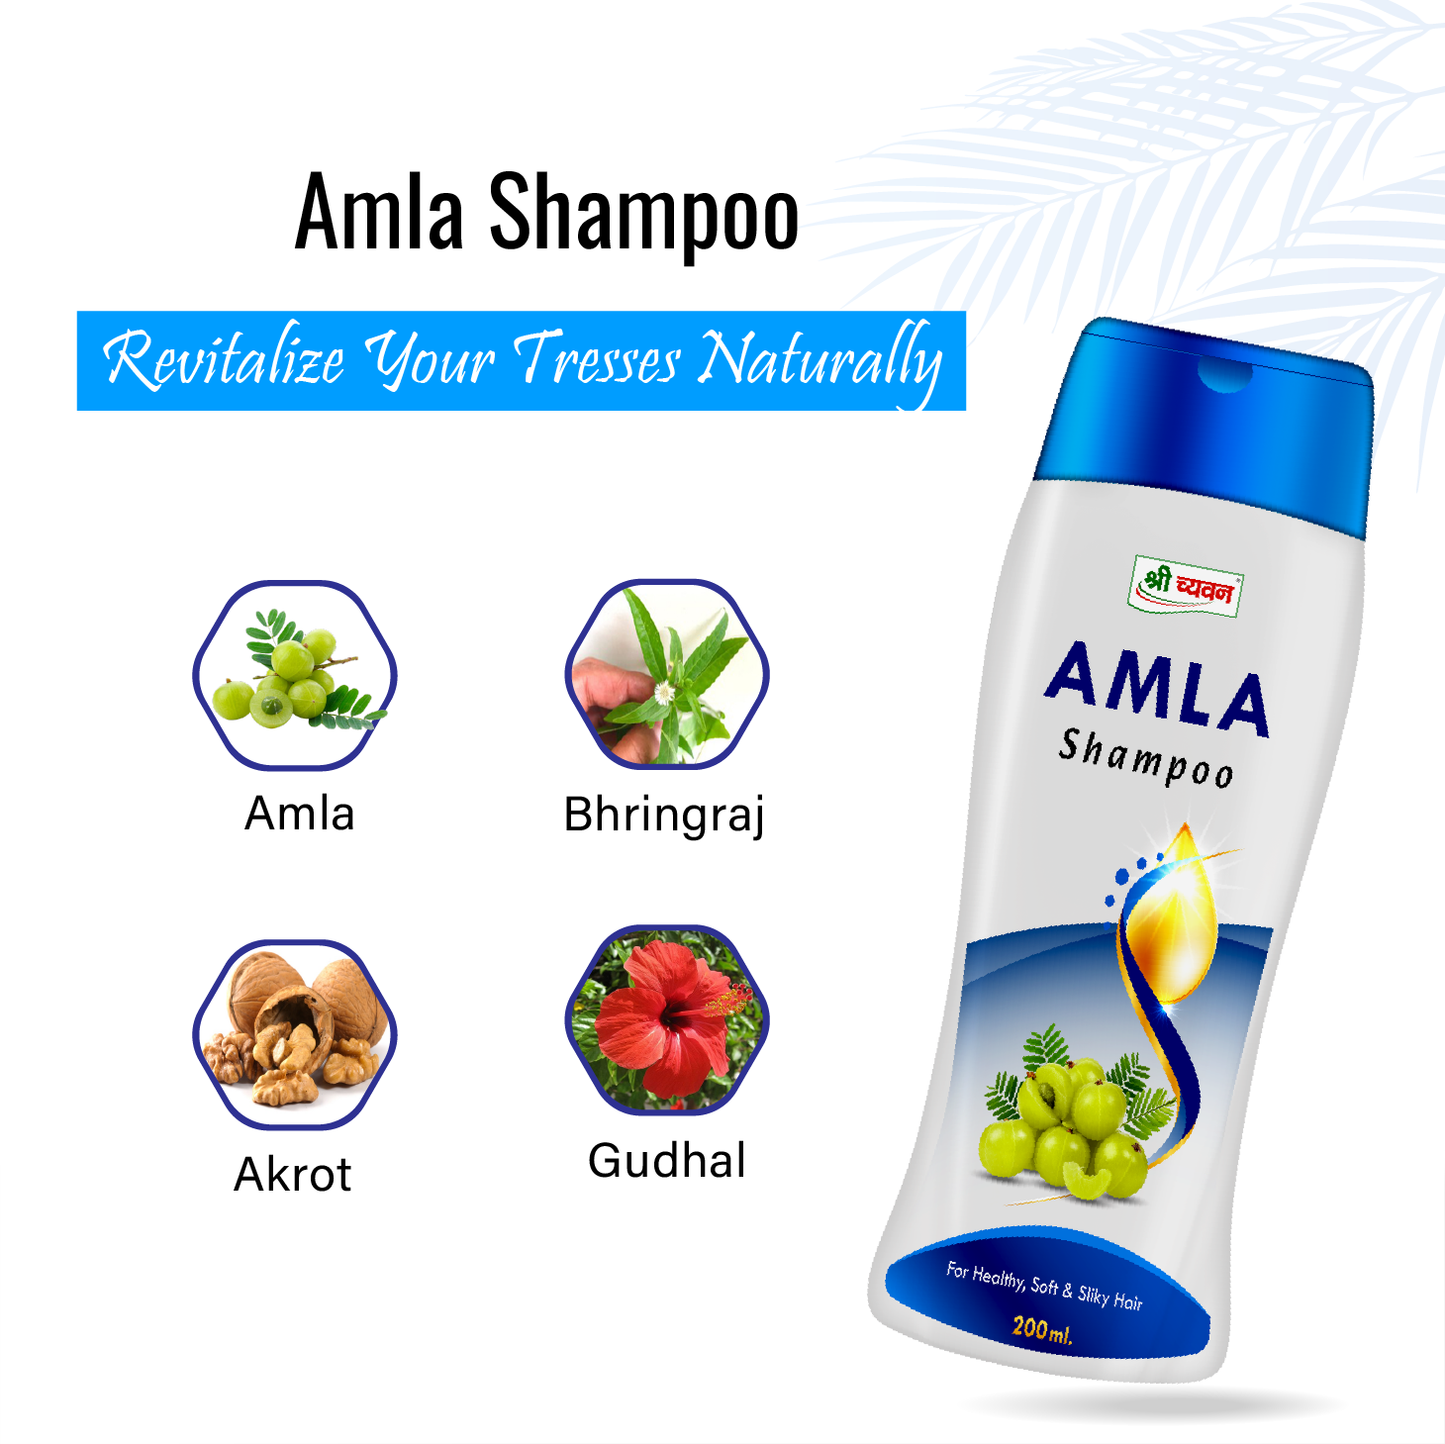 Amla Shampoo Ingredients